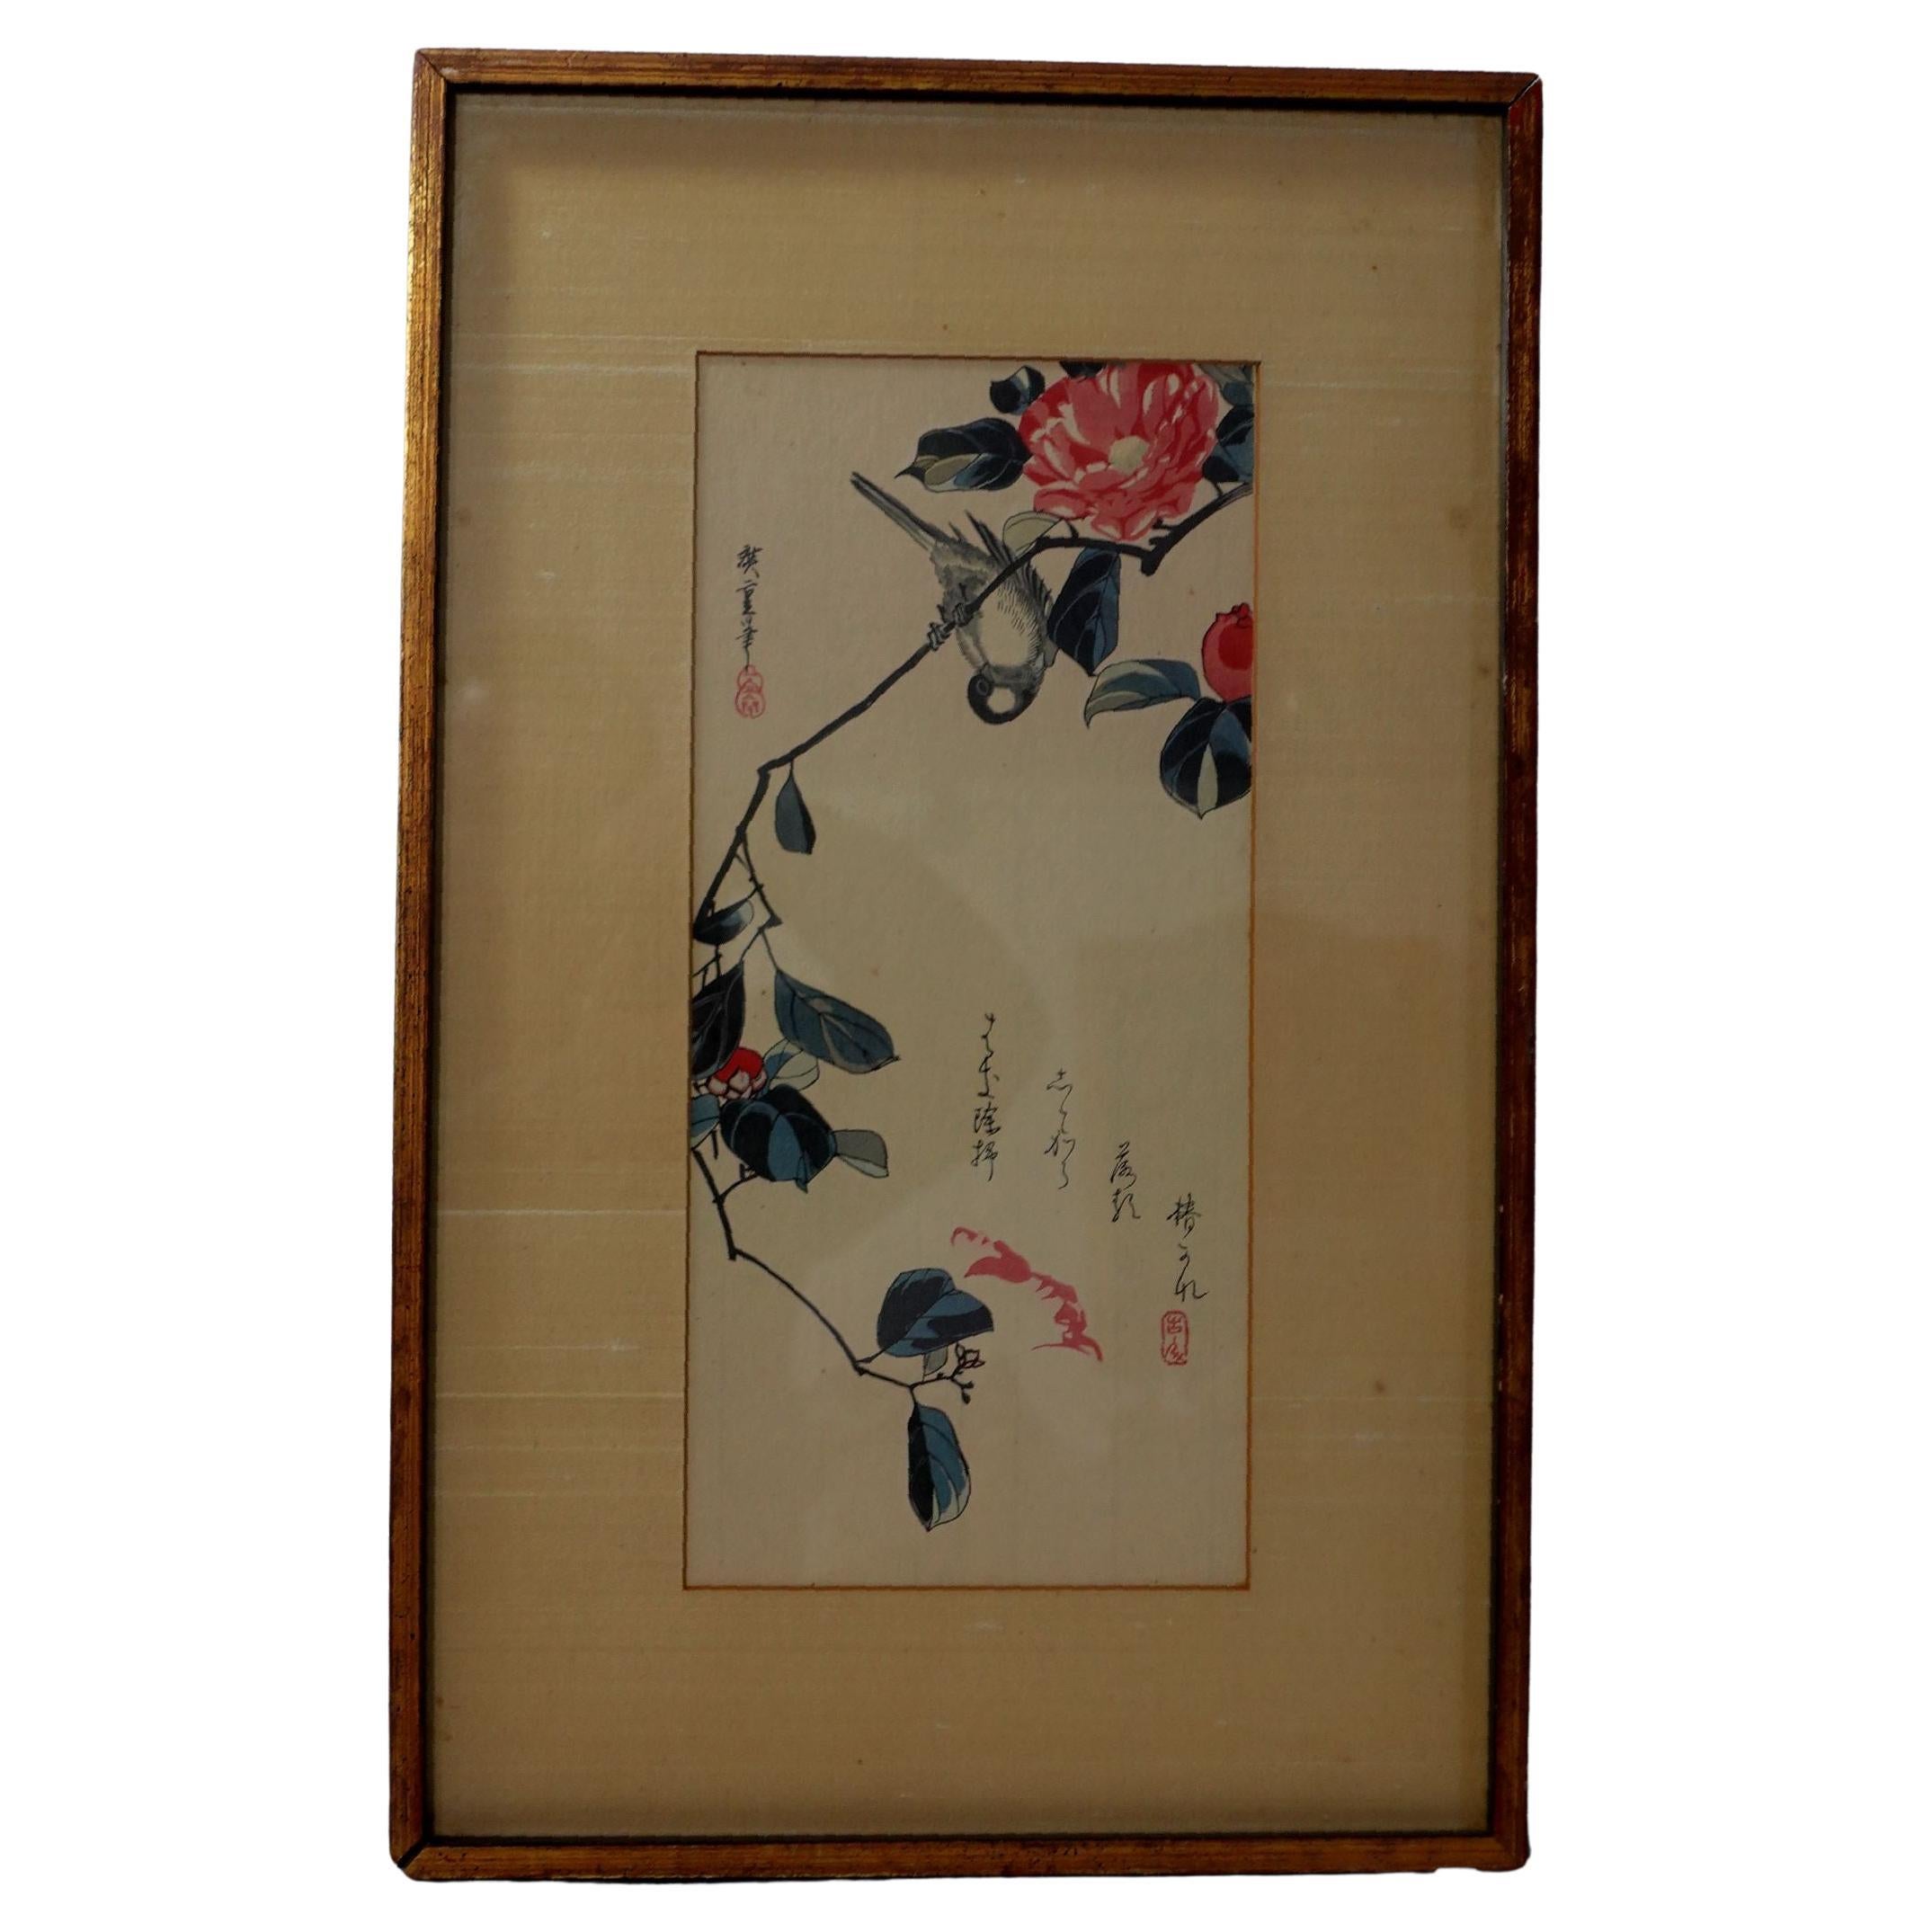 Utagawa Ando Hiroshige Woodblock Print J002, Japan, 1797-1858